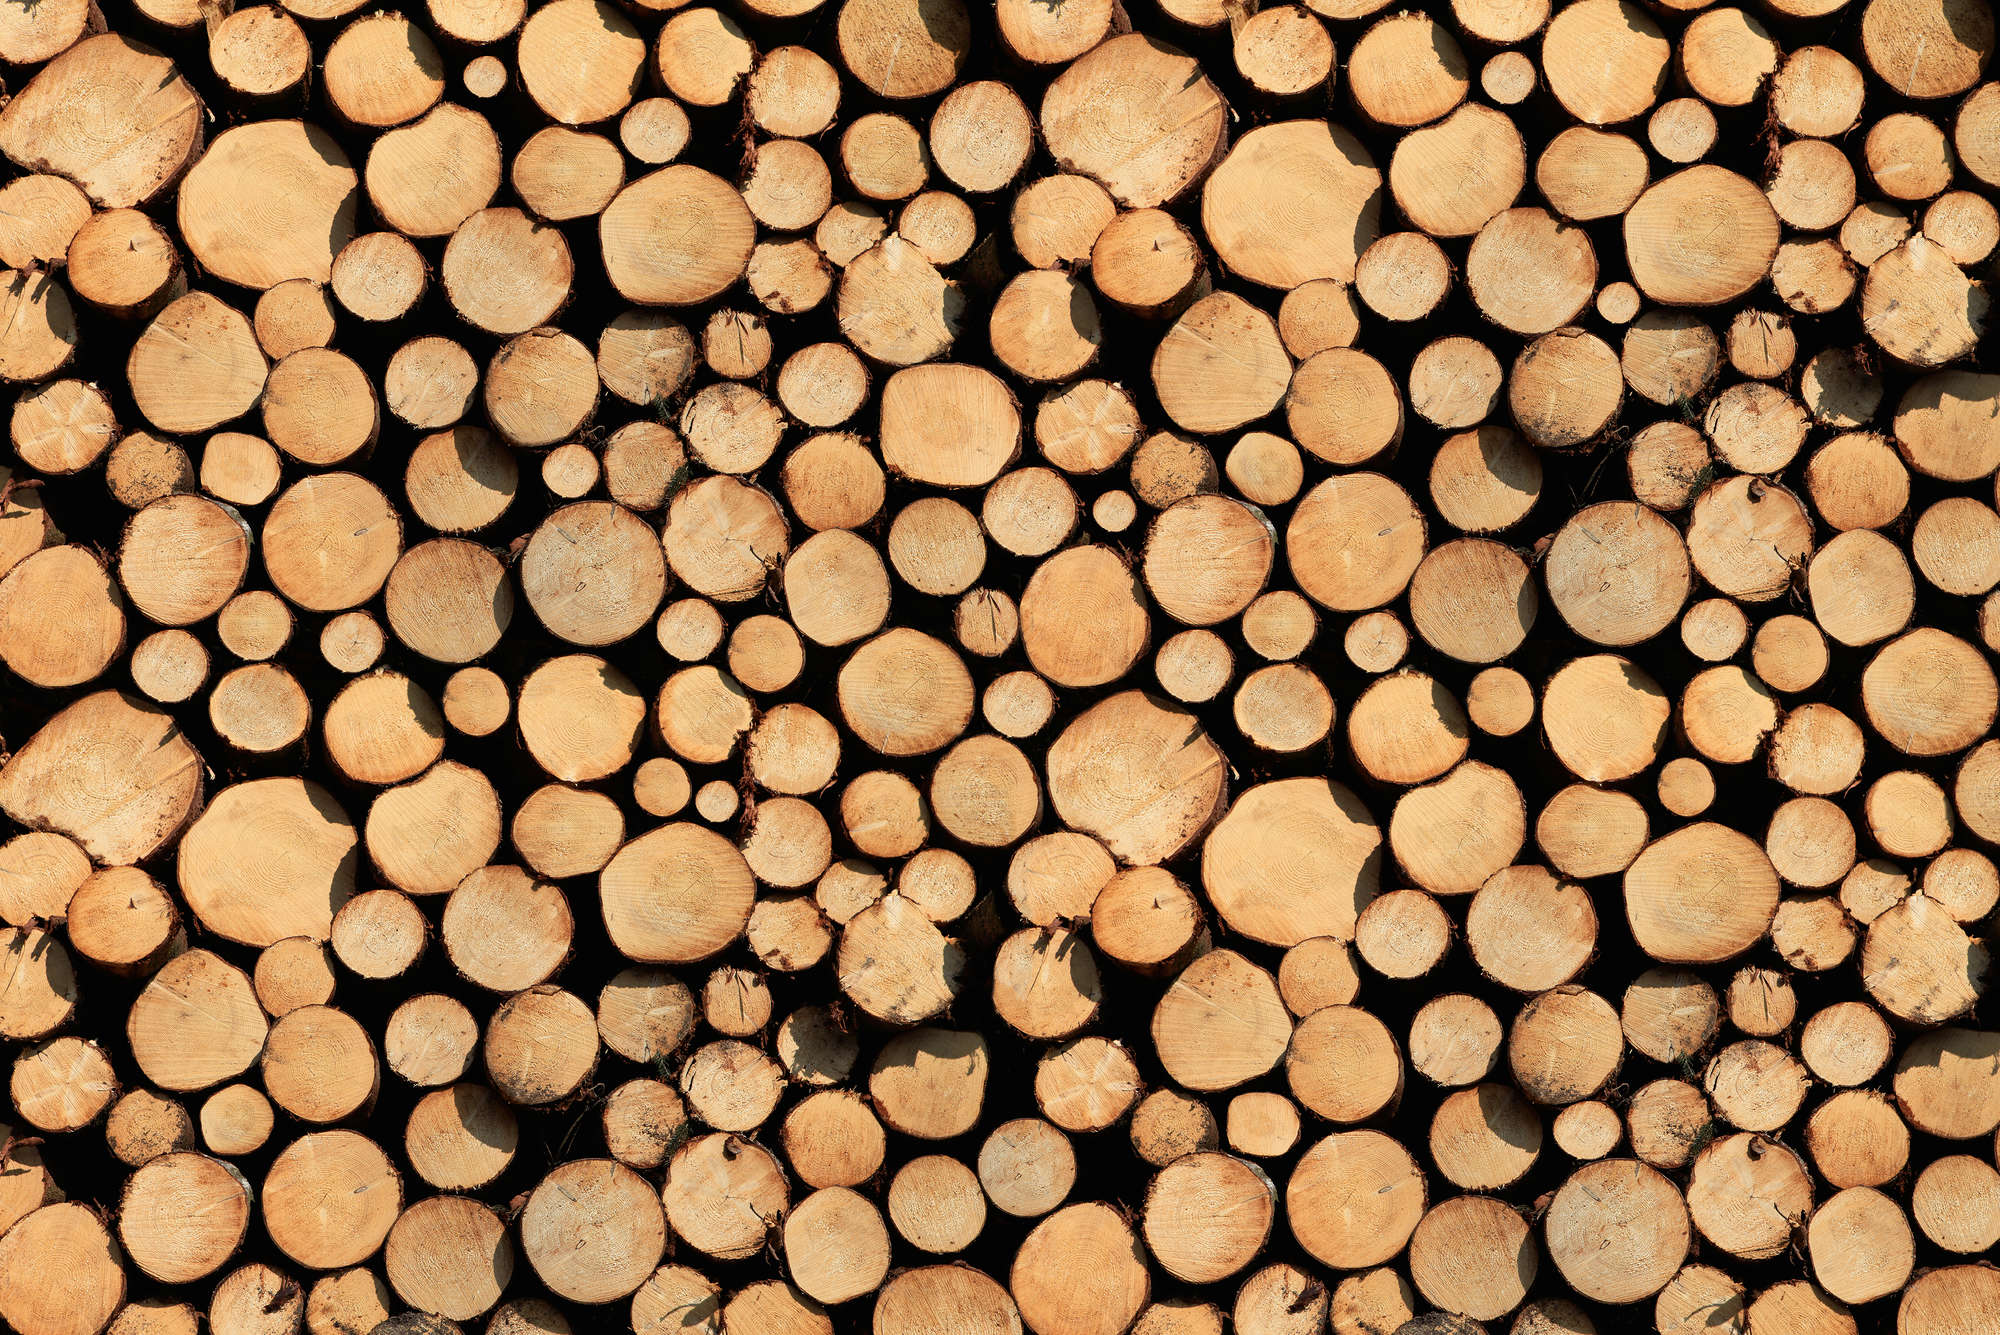             Holz Fototapete gestapeltes Holz auf Premium Glattvlies
        